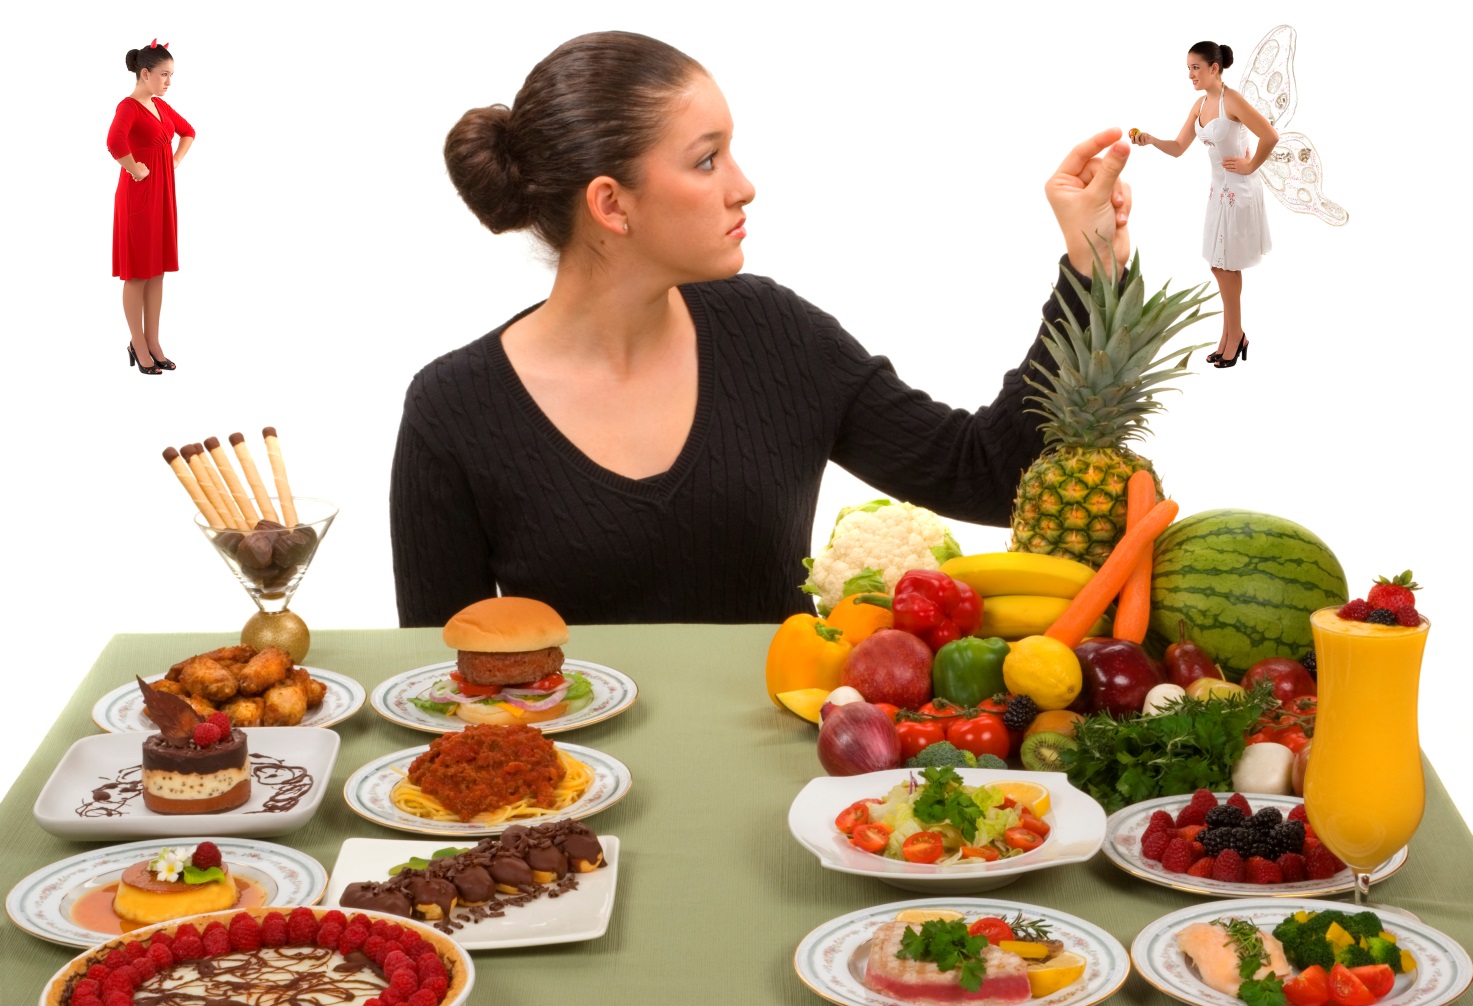 [:ru]Фото женщины, выбирающей здоровое питание для похудения[:ua]Фото жінки, яка вибирає здорове харчування для схуднення[:]